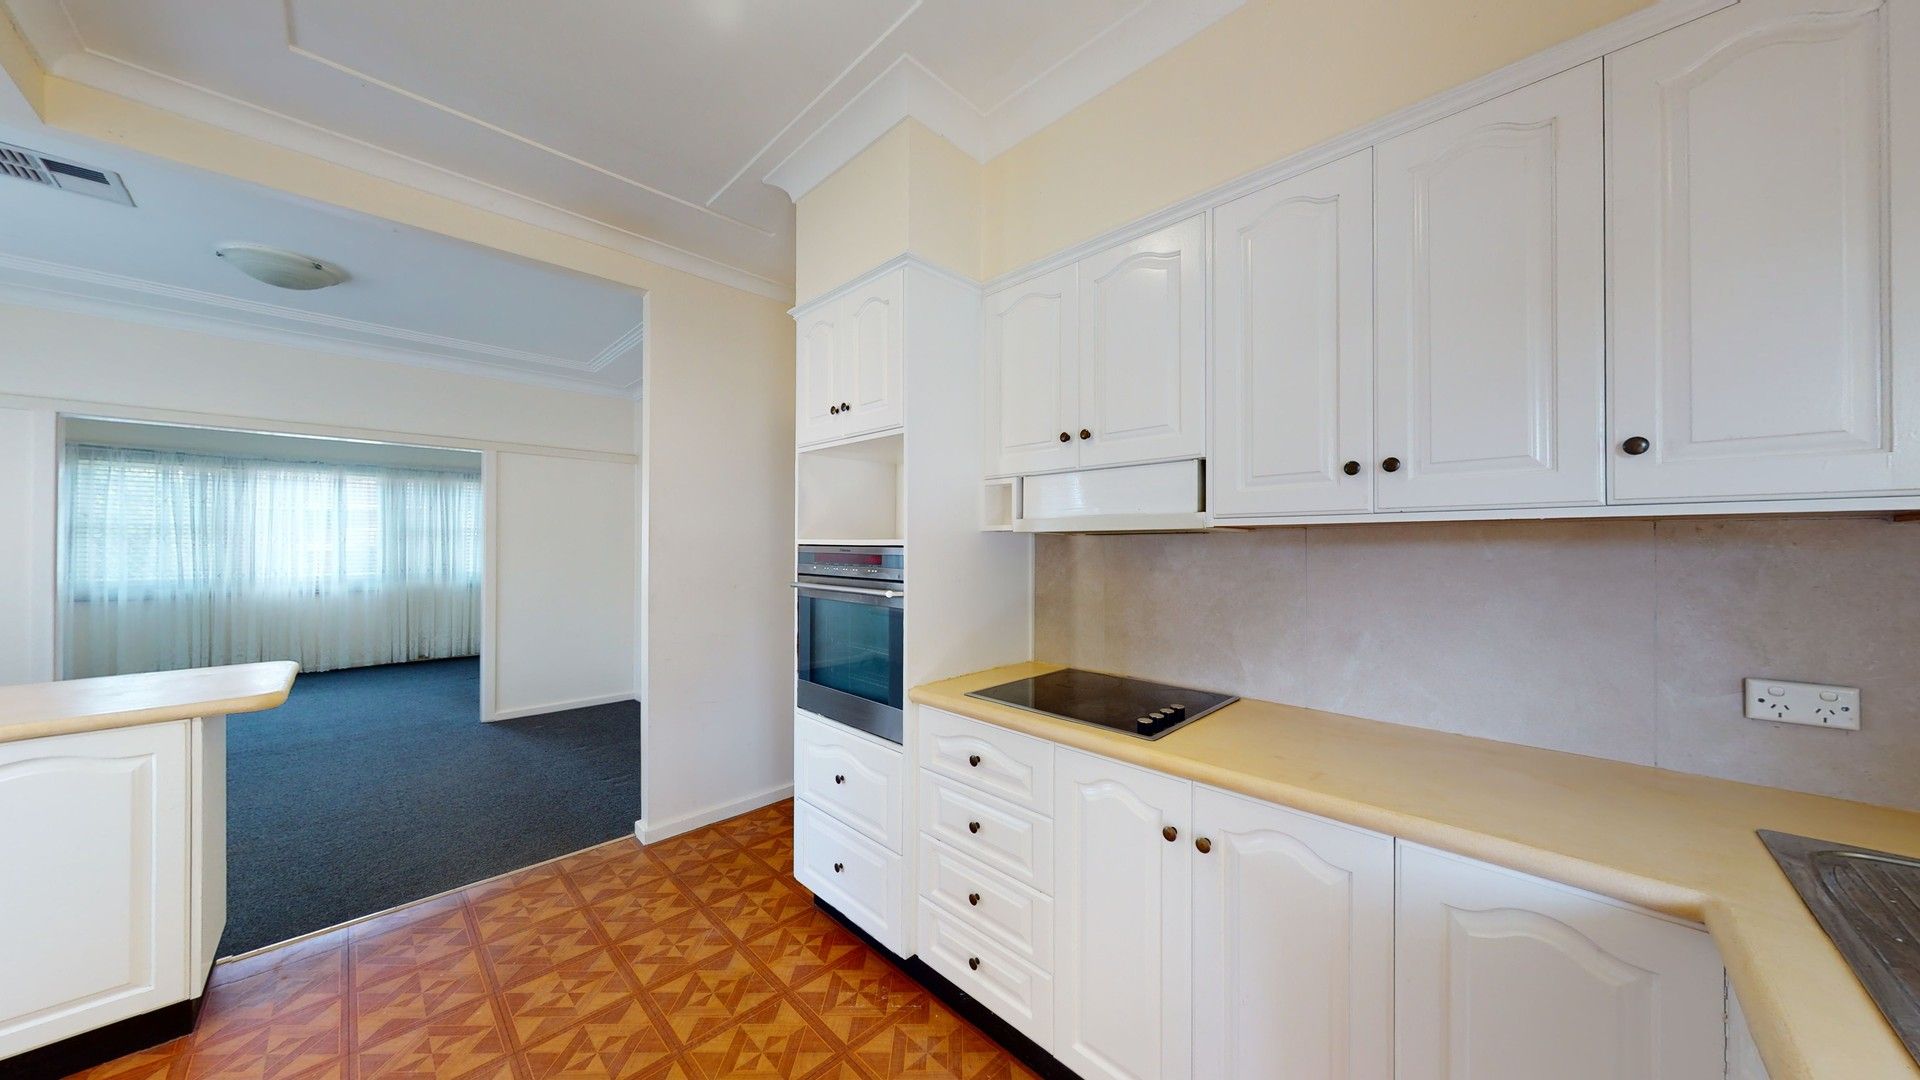 3 bedrooms House in 163 Teralba Road ADAMSTOWN NSW, 2289